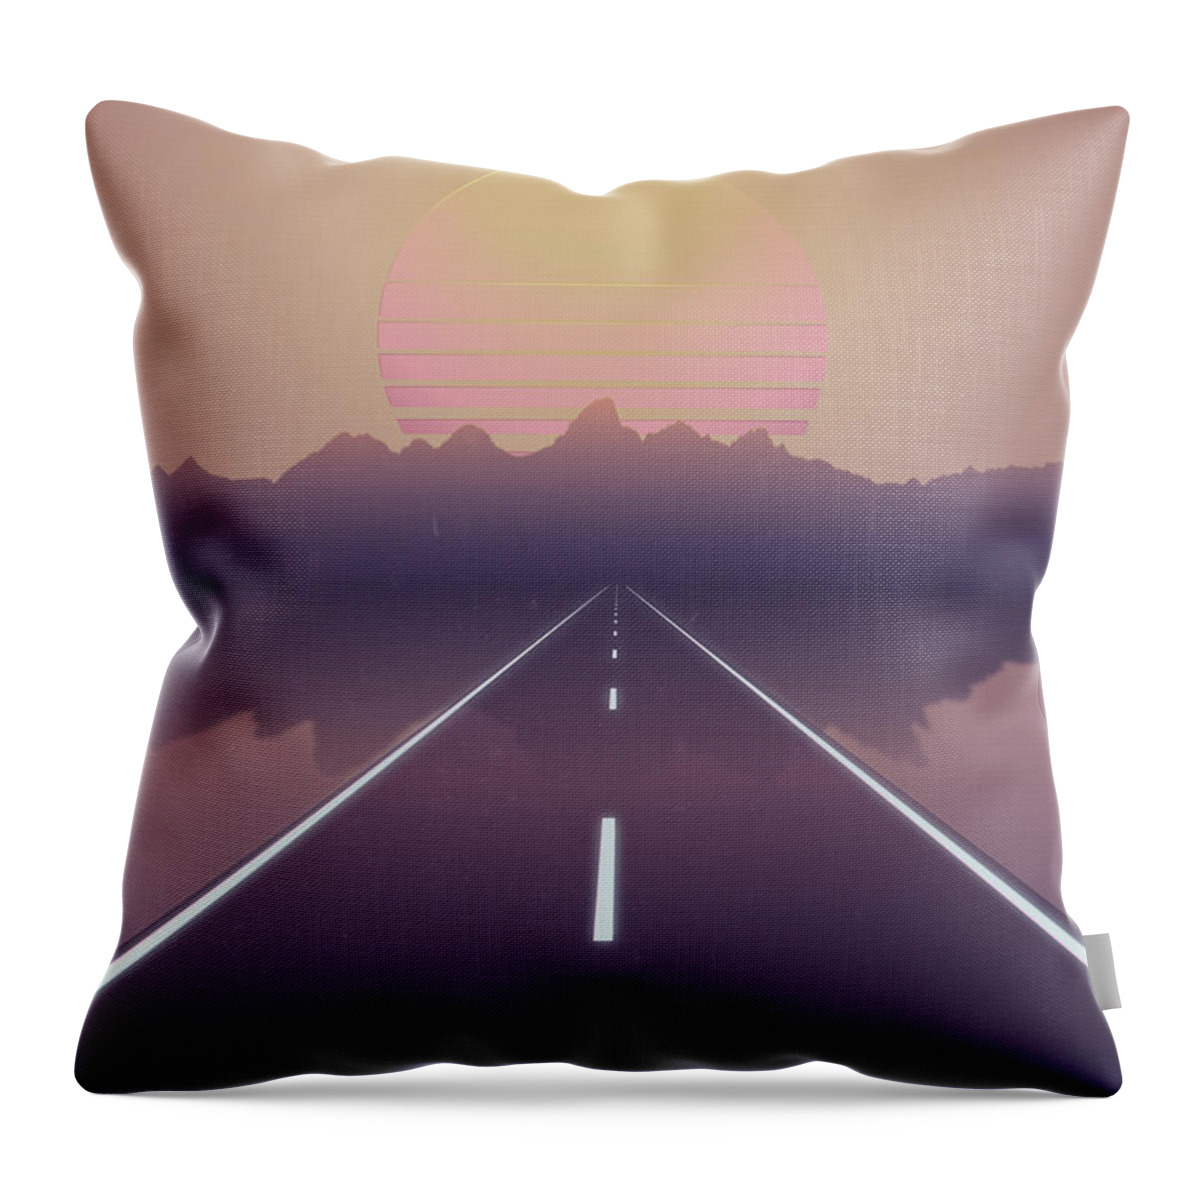 Vaporwave Throw Pillow featuring the digital art Outrun the Sun by Jennifer Walsh